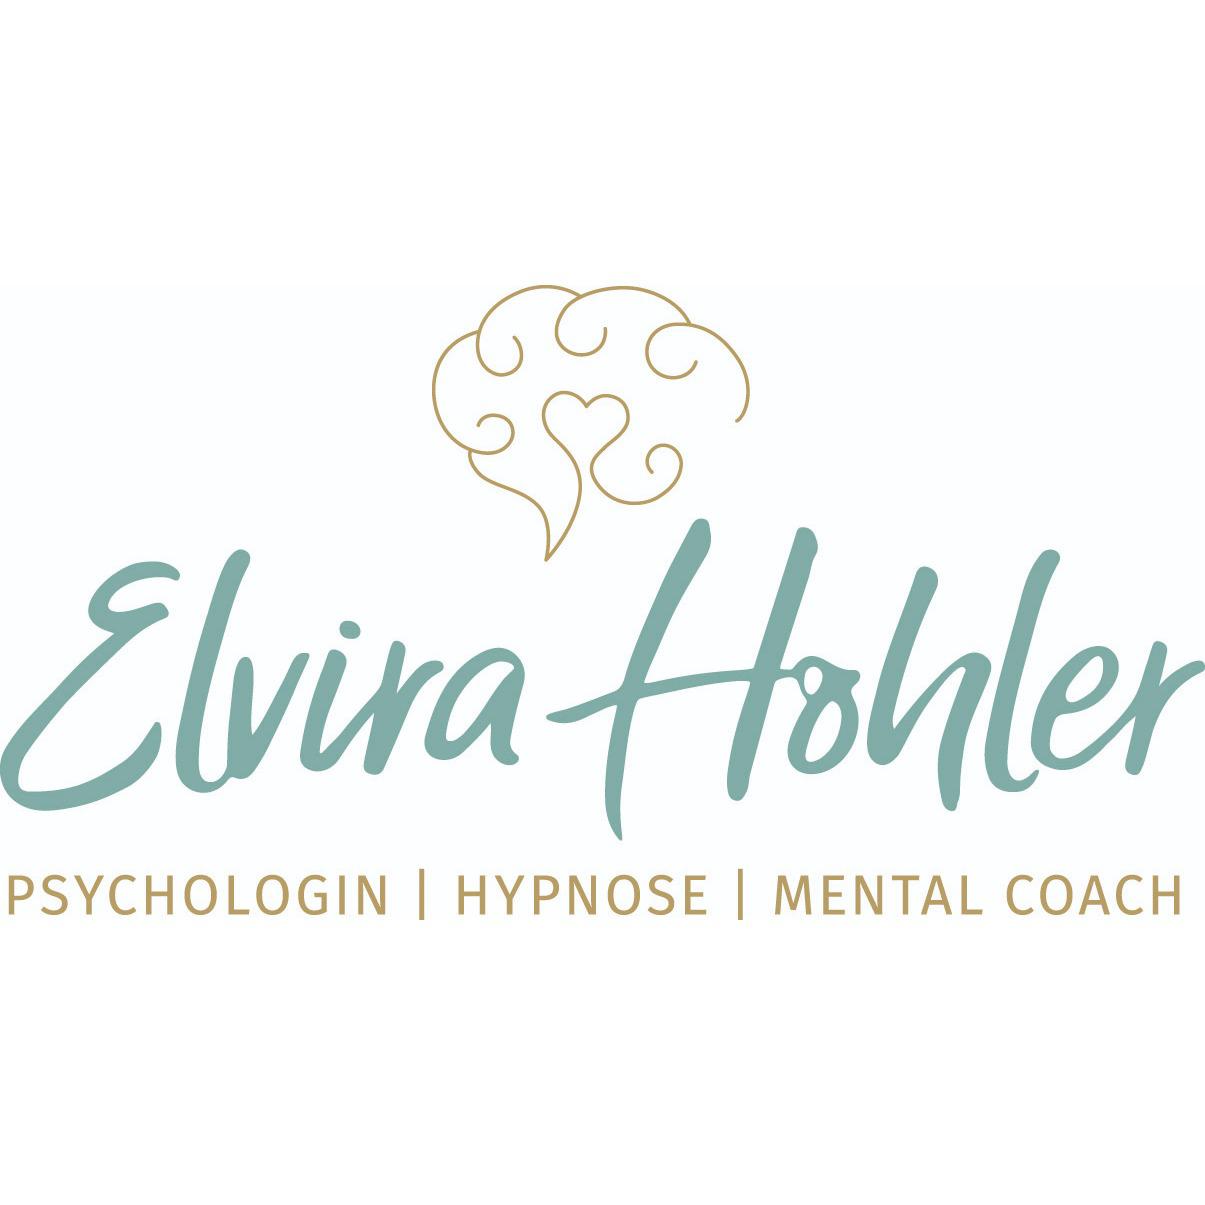 Elvira Hohler, Psychologin, Hypnose, Mental Coach Logo